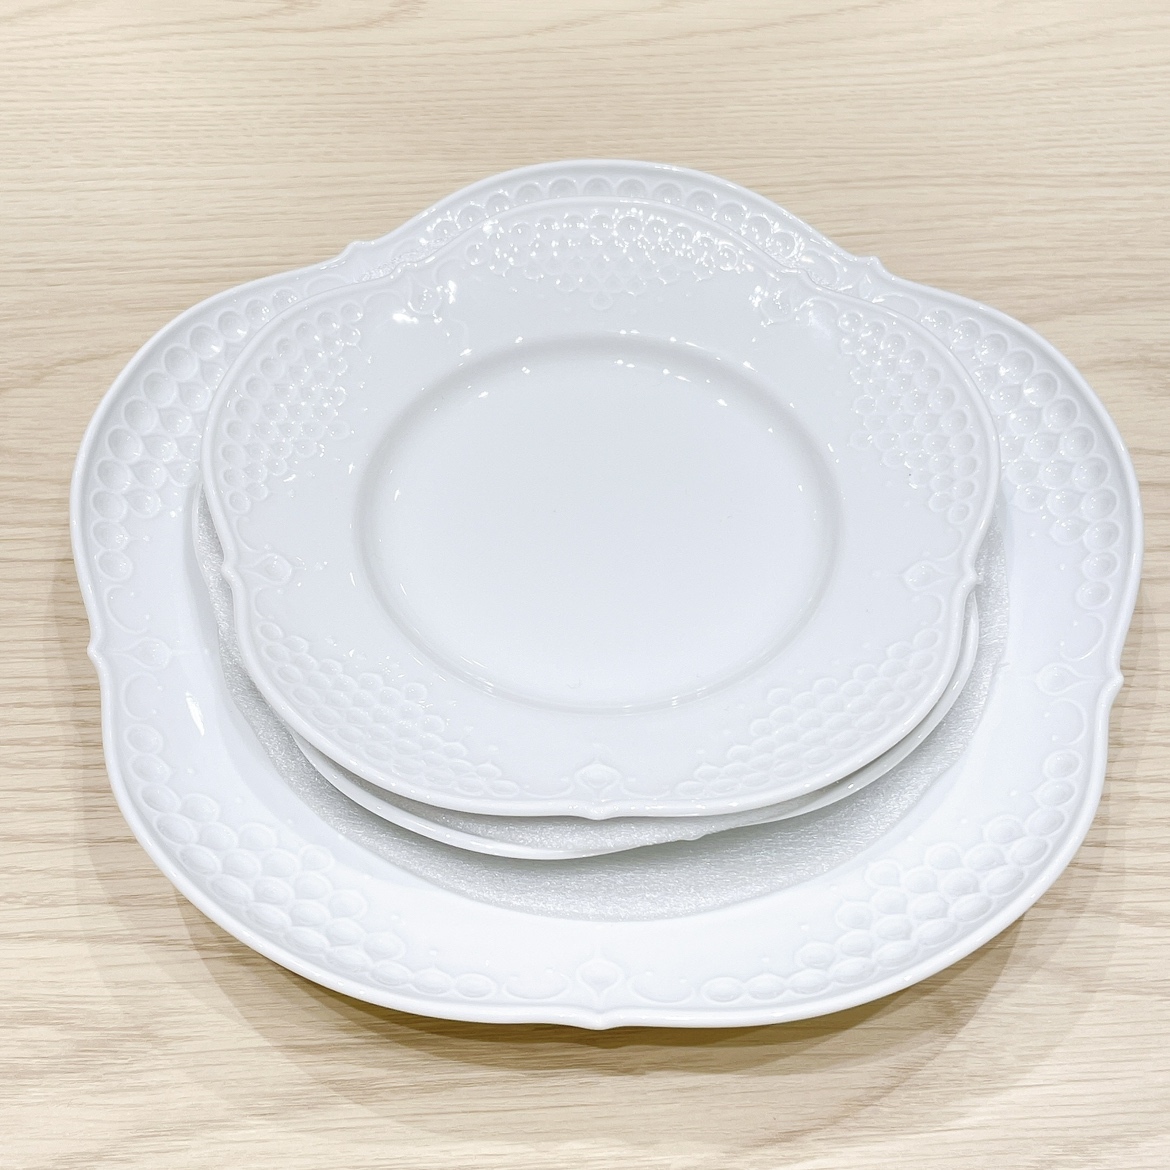 [OMO402HM]Meissen Meissen белый relief 3 тарелка комплект ( большая тарелка 1 маленькая тарелка 2) посуда plate большая тарелка примерно 26cm маленькая тарелка примерно 19cm.. запад 1 иен ~